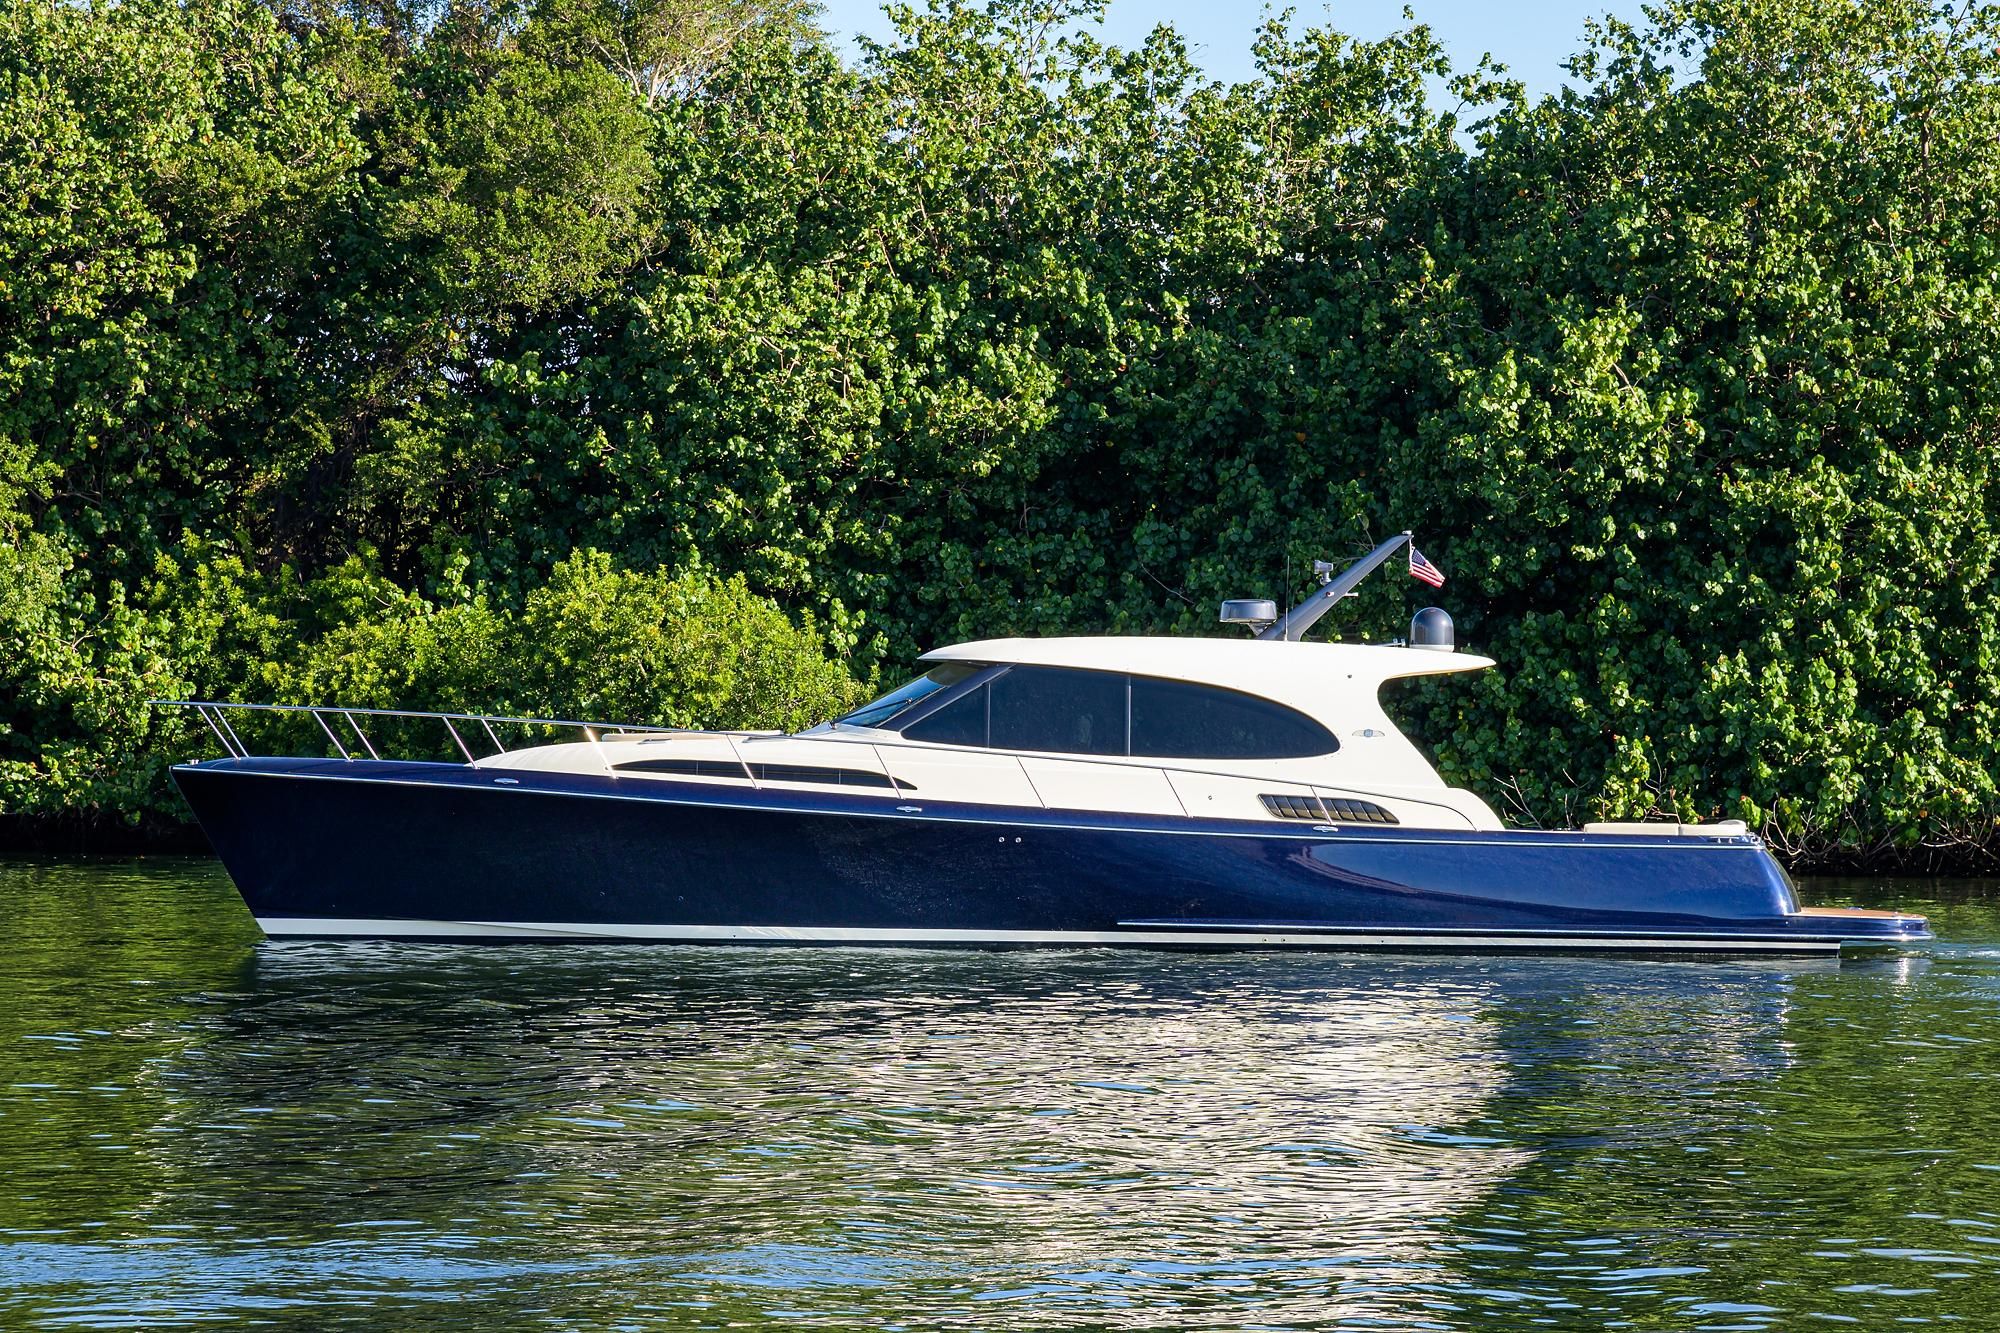 2021 Palm Beach Motor Yachts Gt60 Motor Yacht For Sale Yachtworld